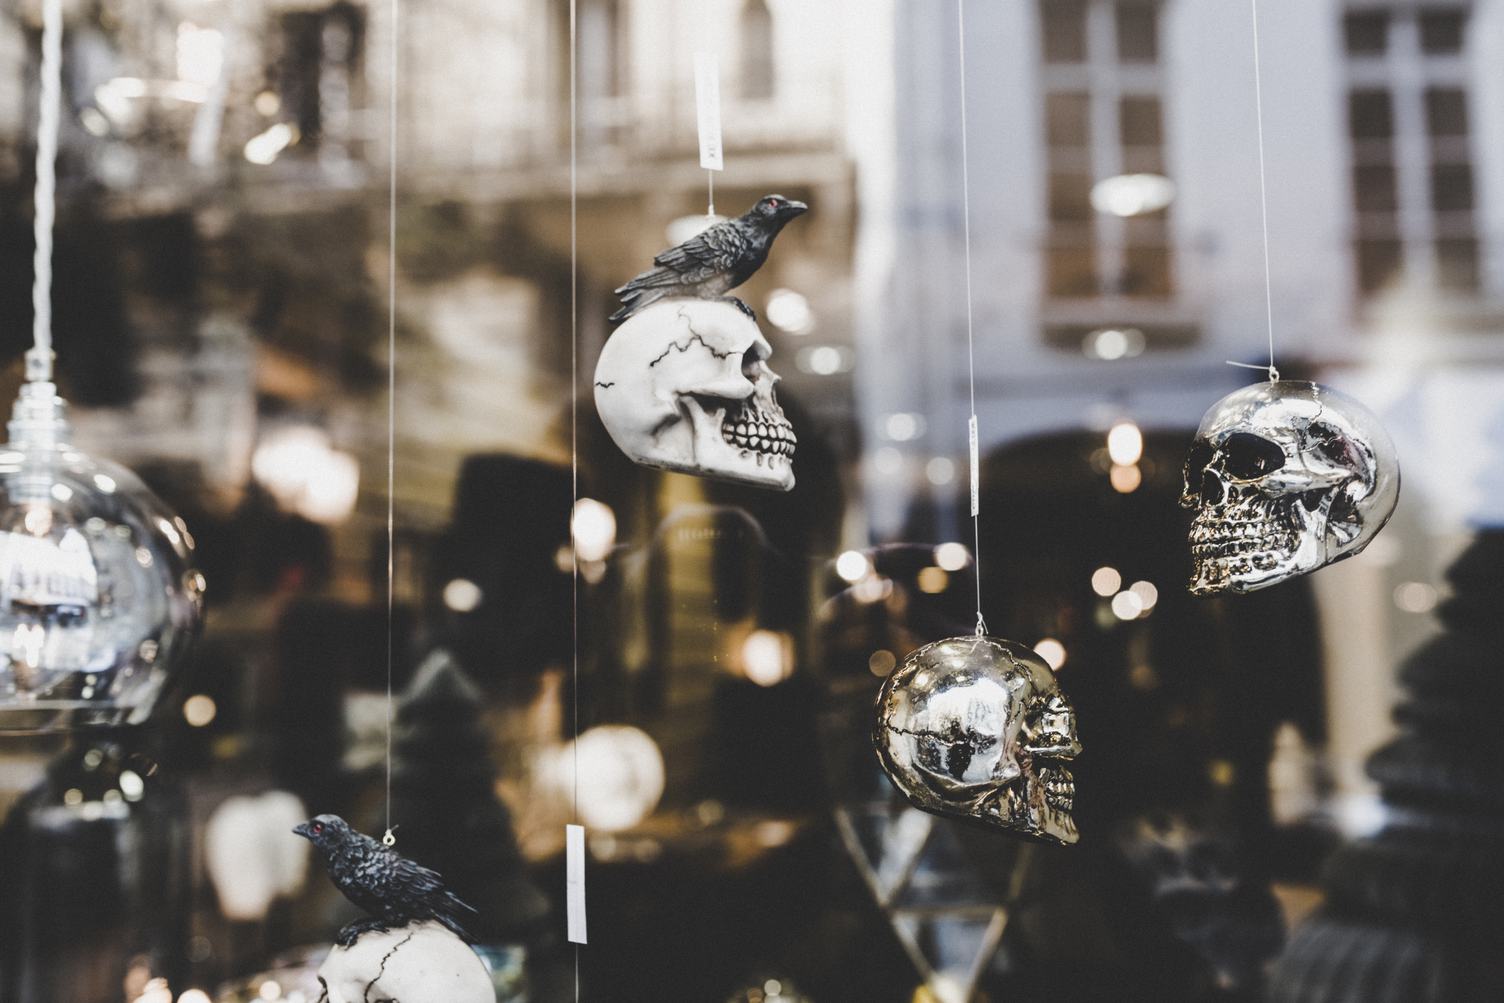 Skulls Decoration in a Shop Window